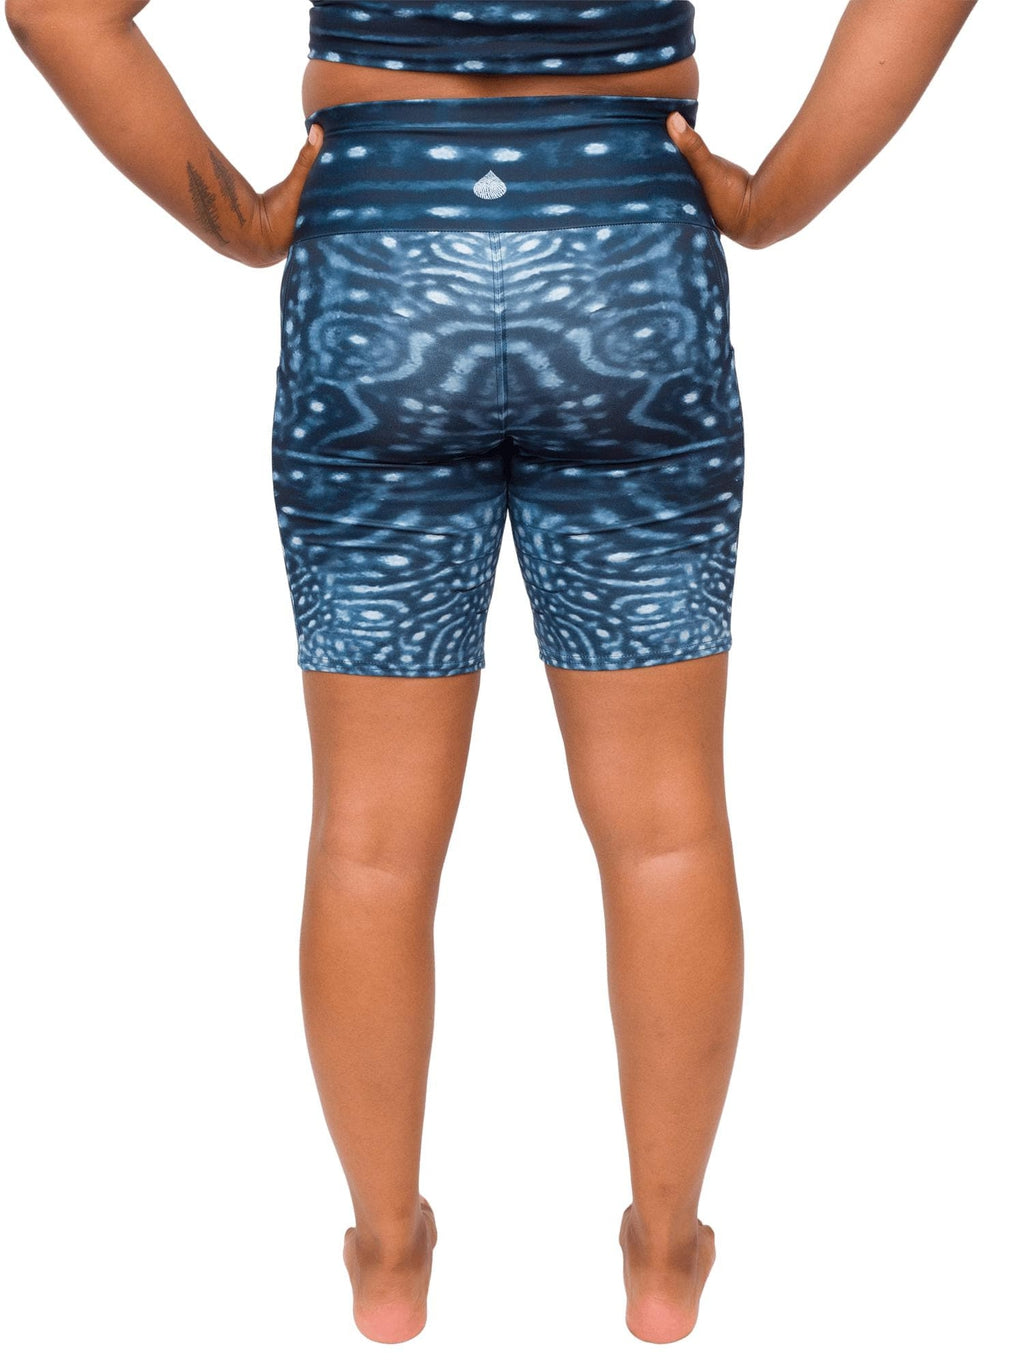 Waterlust whale shark printed biker shorts - back view